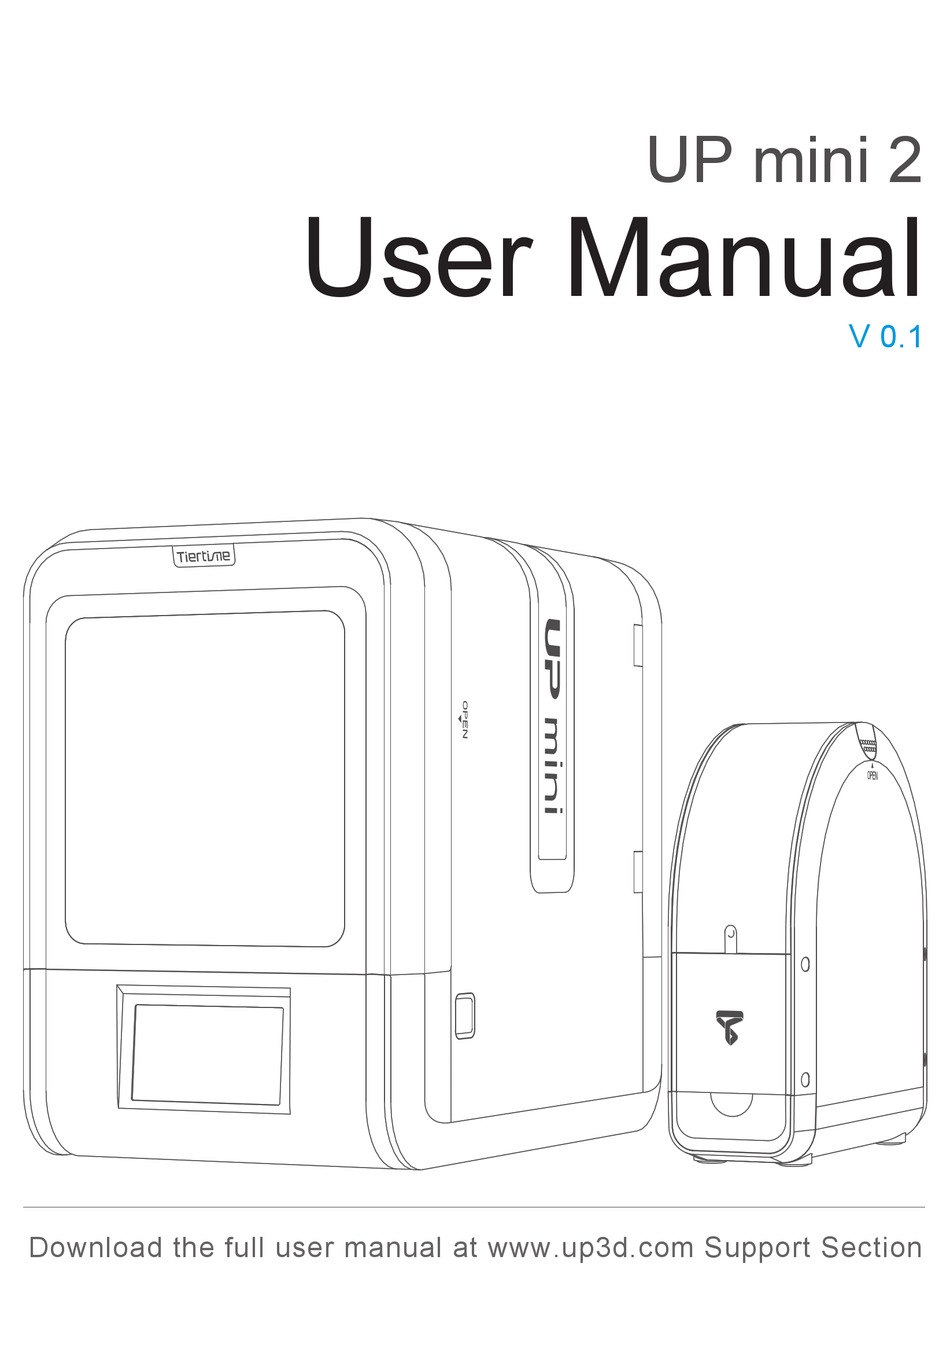 UP MINI 2 USER MANUAL Pdf Download | ManualsLib